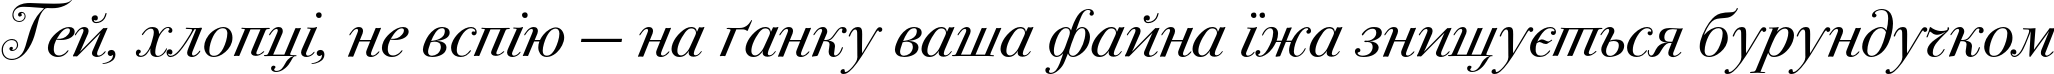 Пример написания шрифтом BodoniSevSwashITC текста на украинском